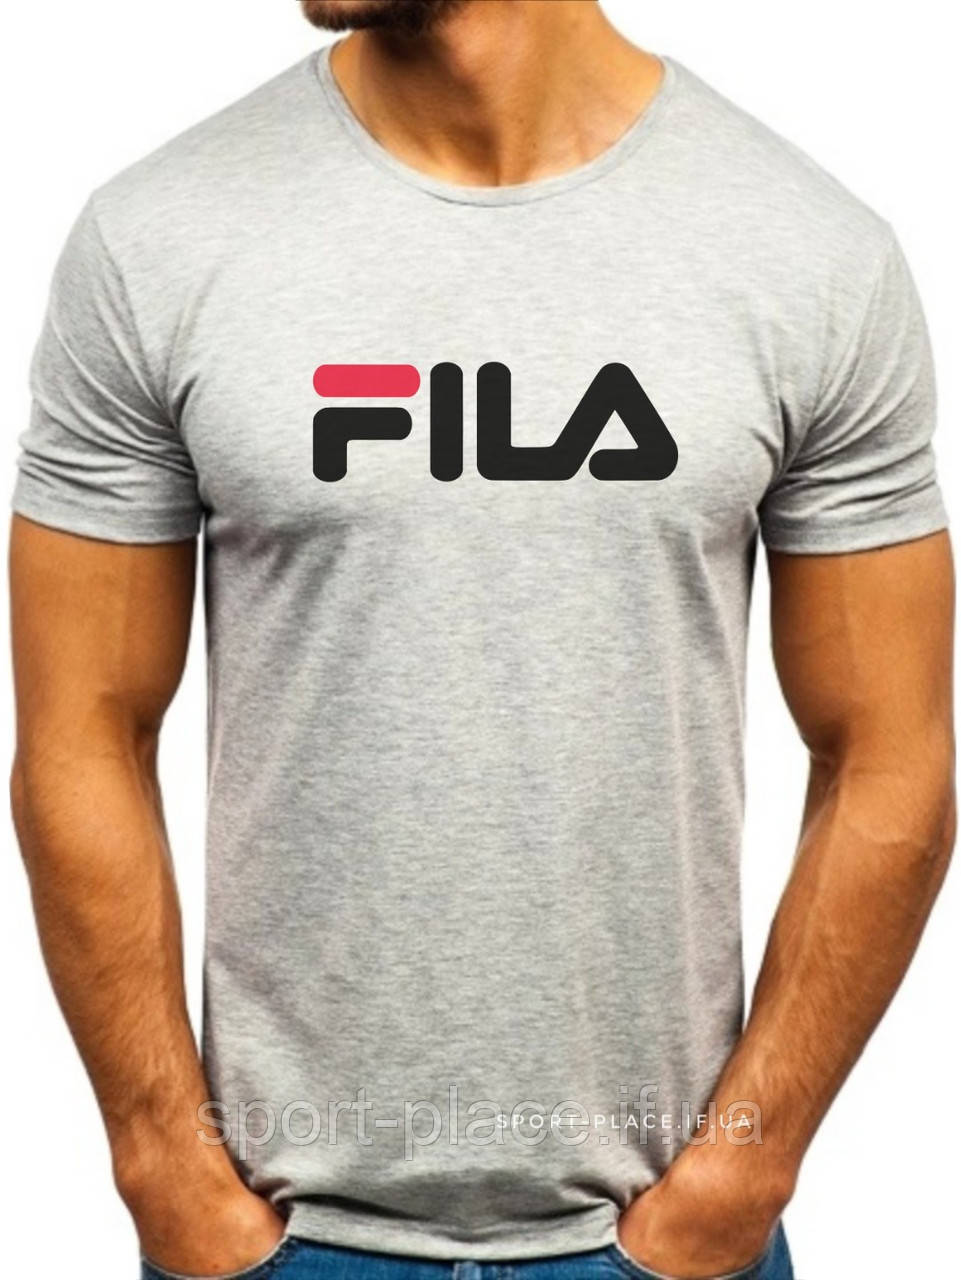 Чоловіча футболка Fila (Філа), сіра (велика емблема) бавовна